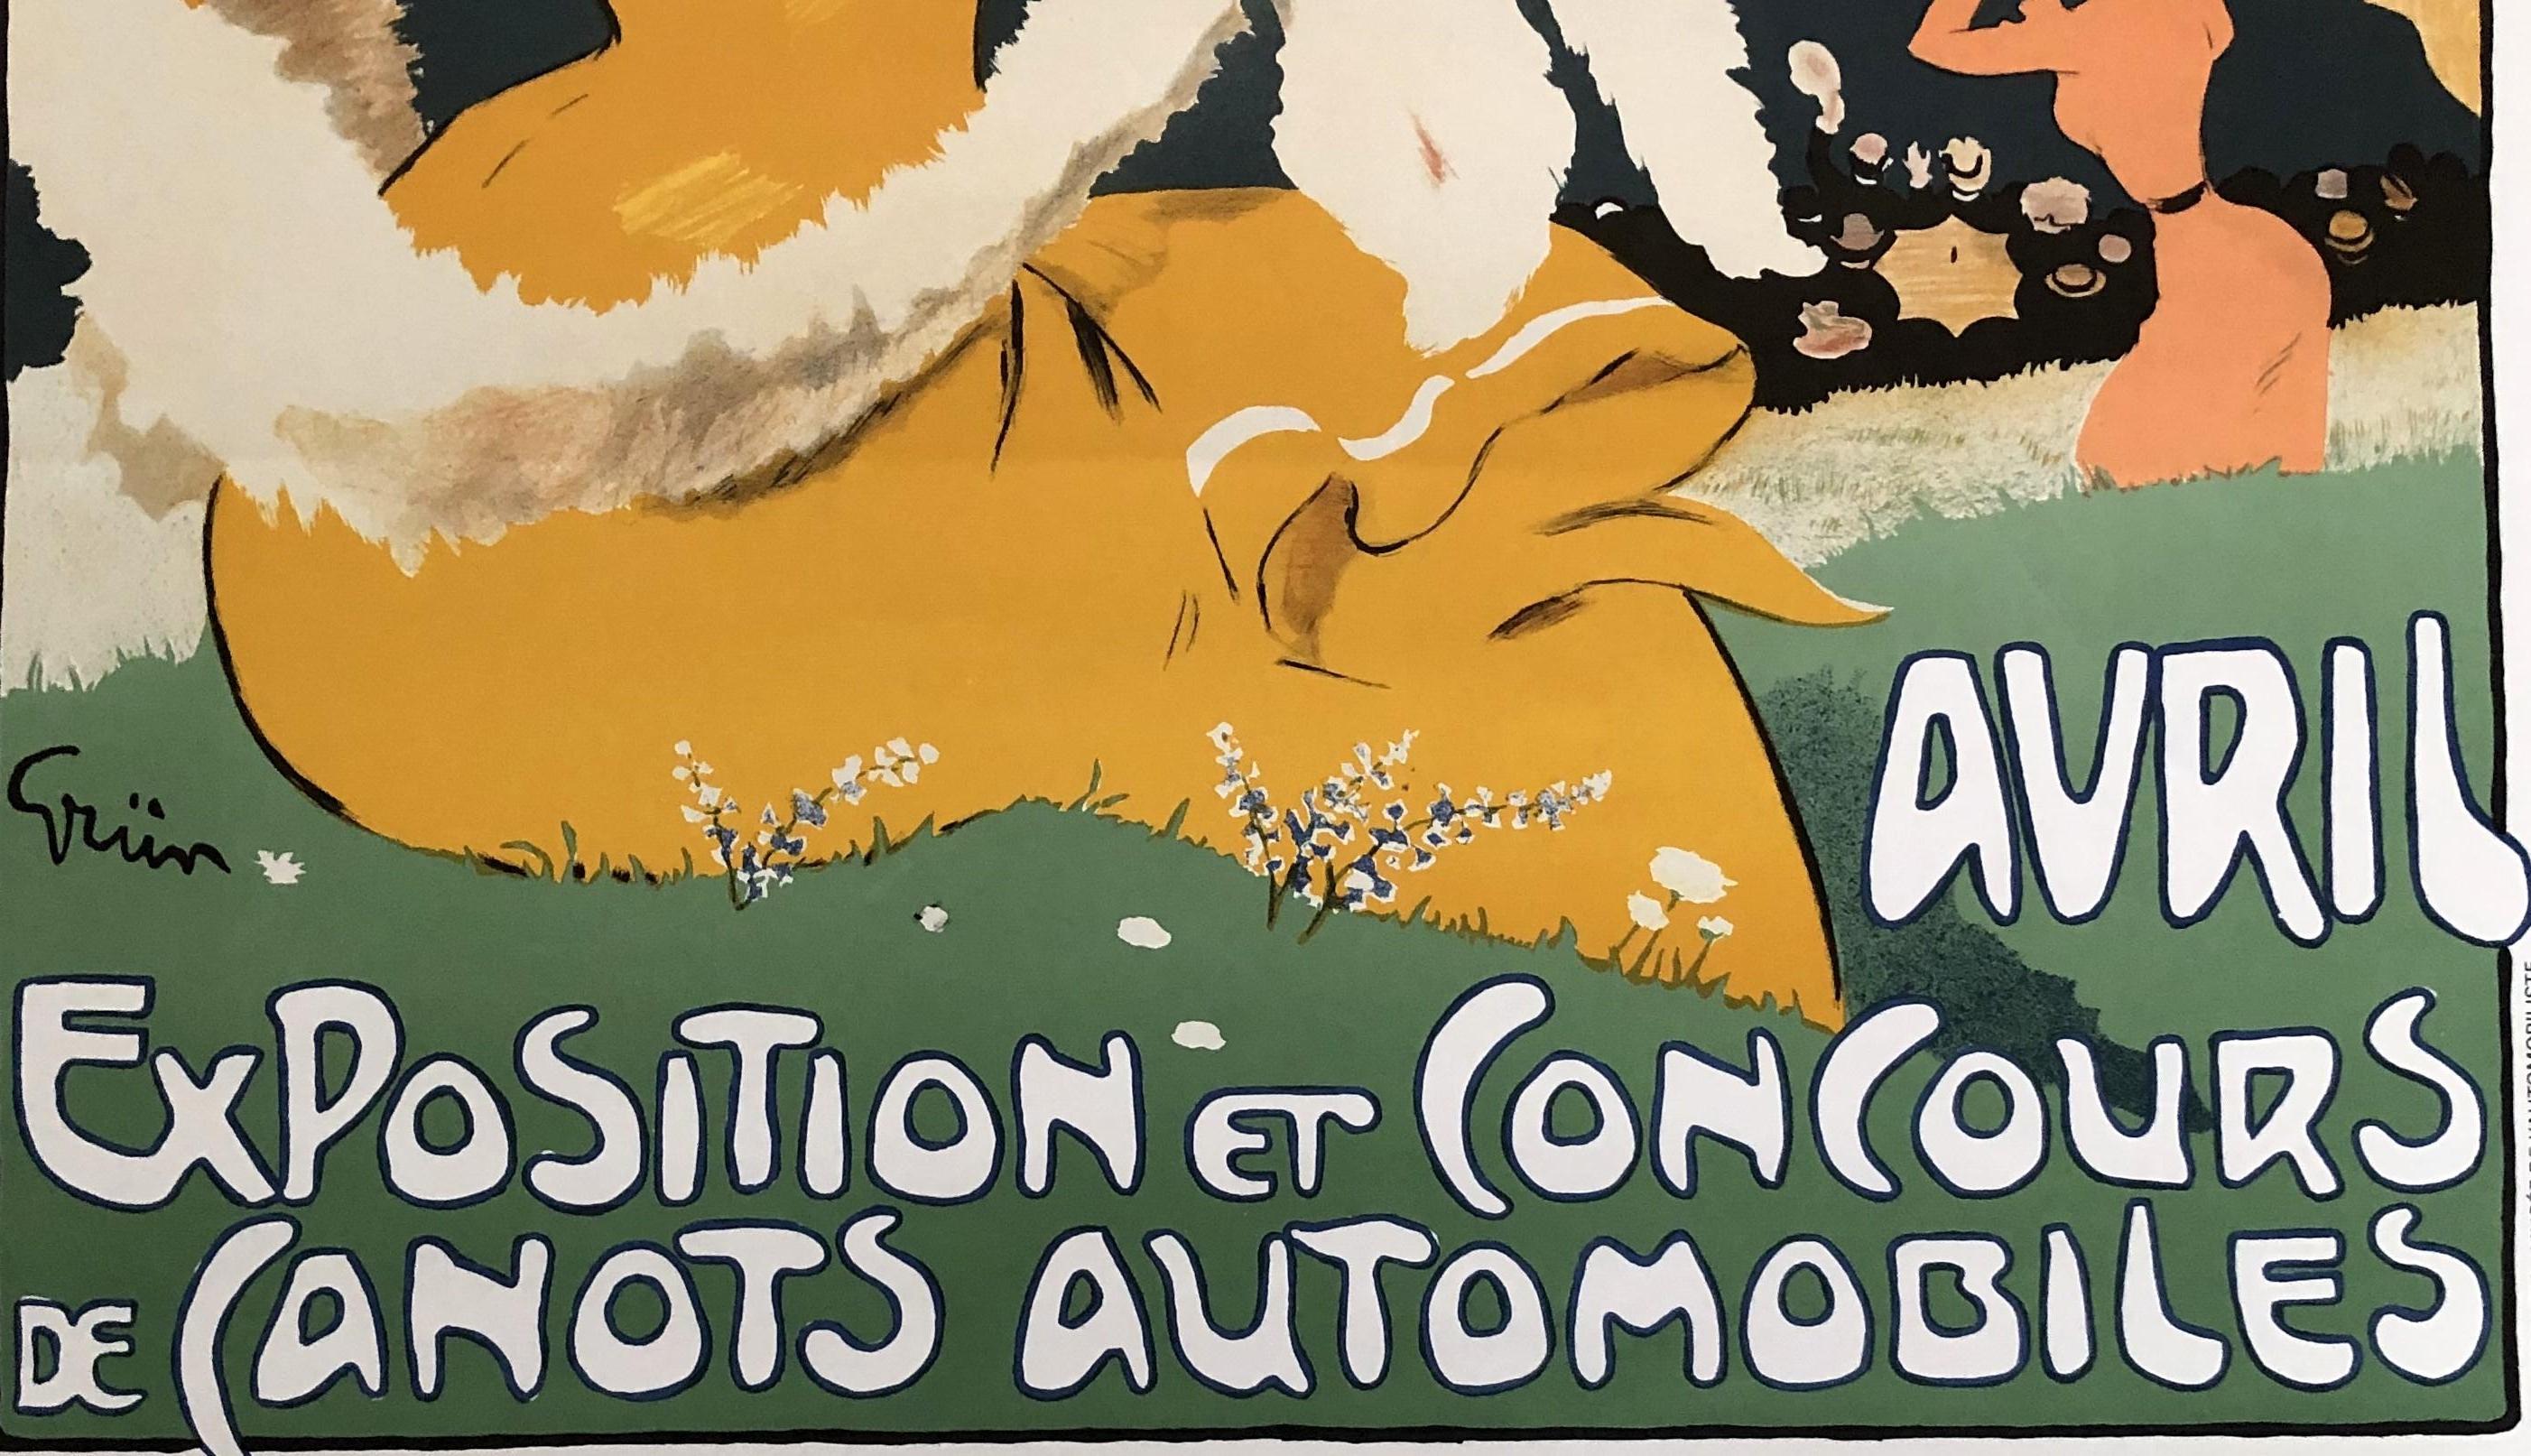 Monaco Exposition And Concours Automobiles - Lithographic Poster Signed - Beige Landscape Print by Jules-Alexandre Grün